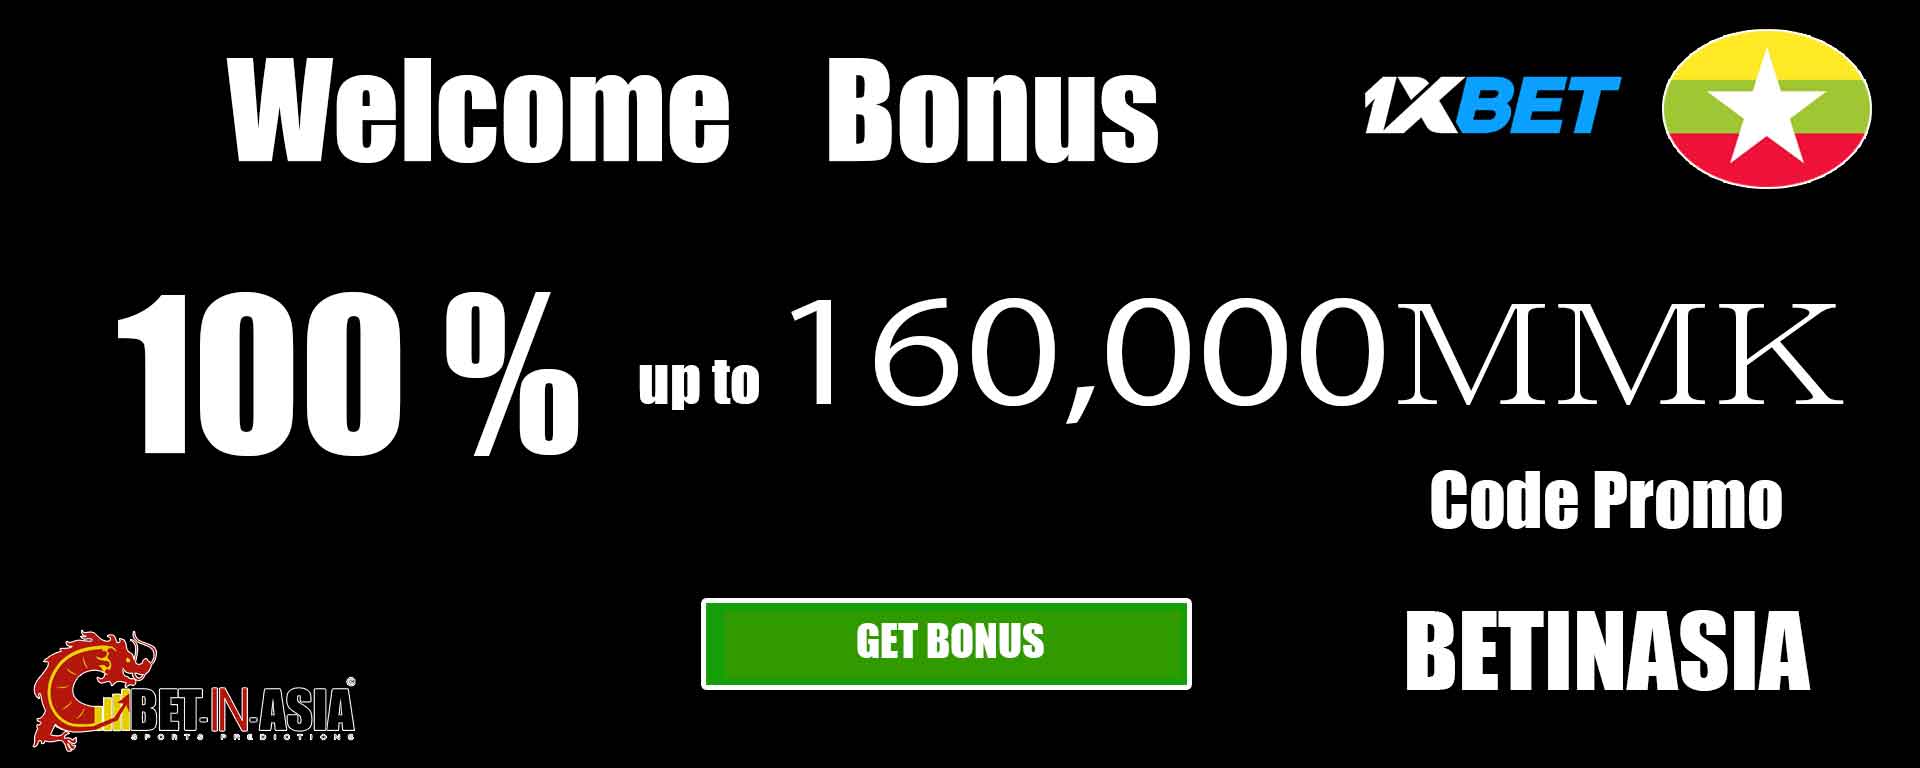 1xbet Myanmar welcome bonus 100 % on first deposit